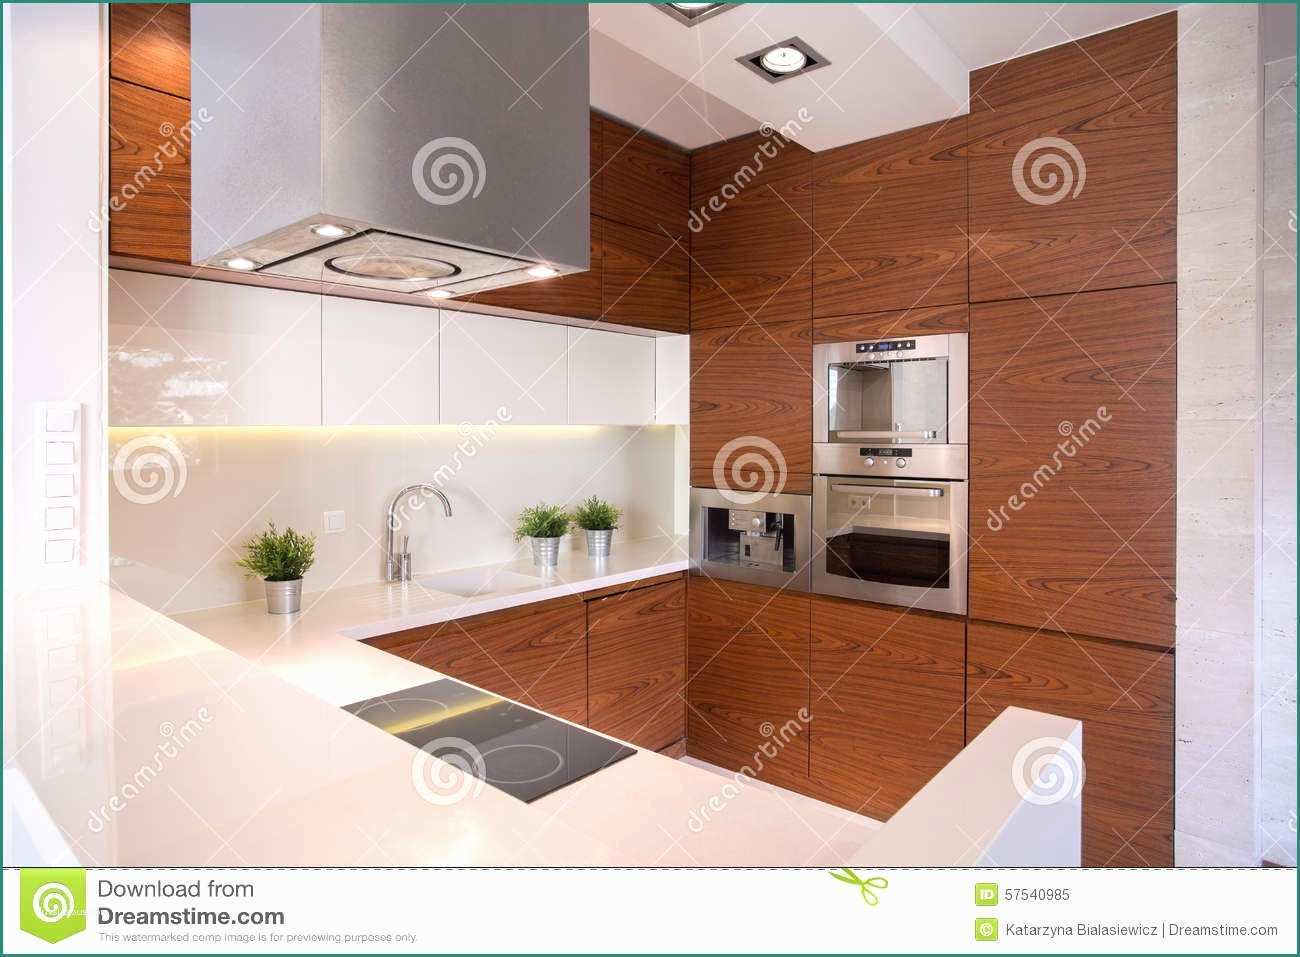 Leroy Merlin Rubinetti Cucina E top Cucina Leroy Merlin Home Design Ideas Home Design